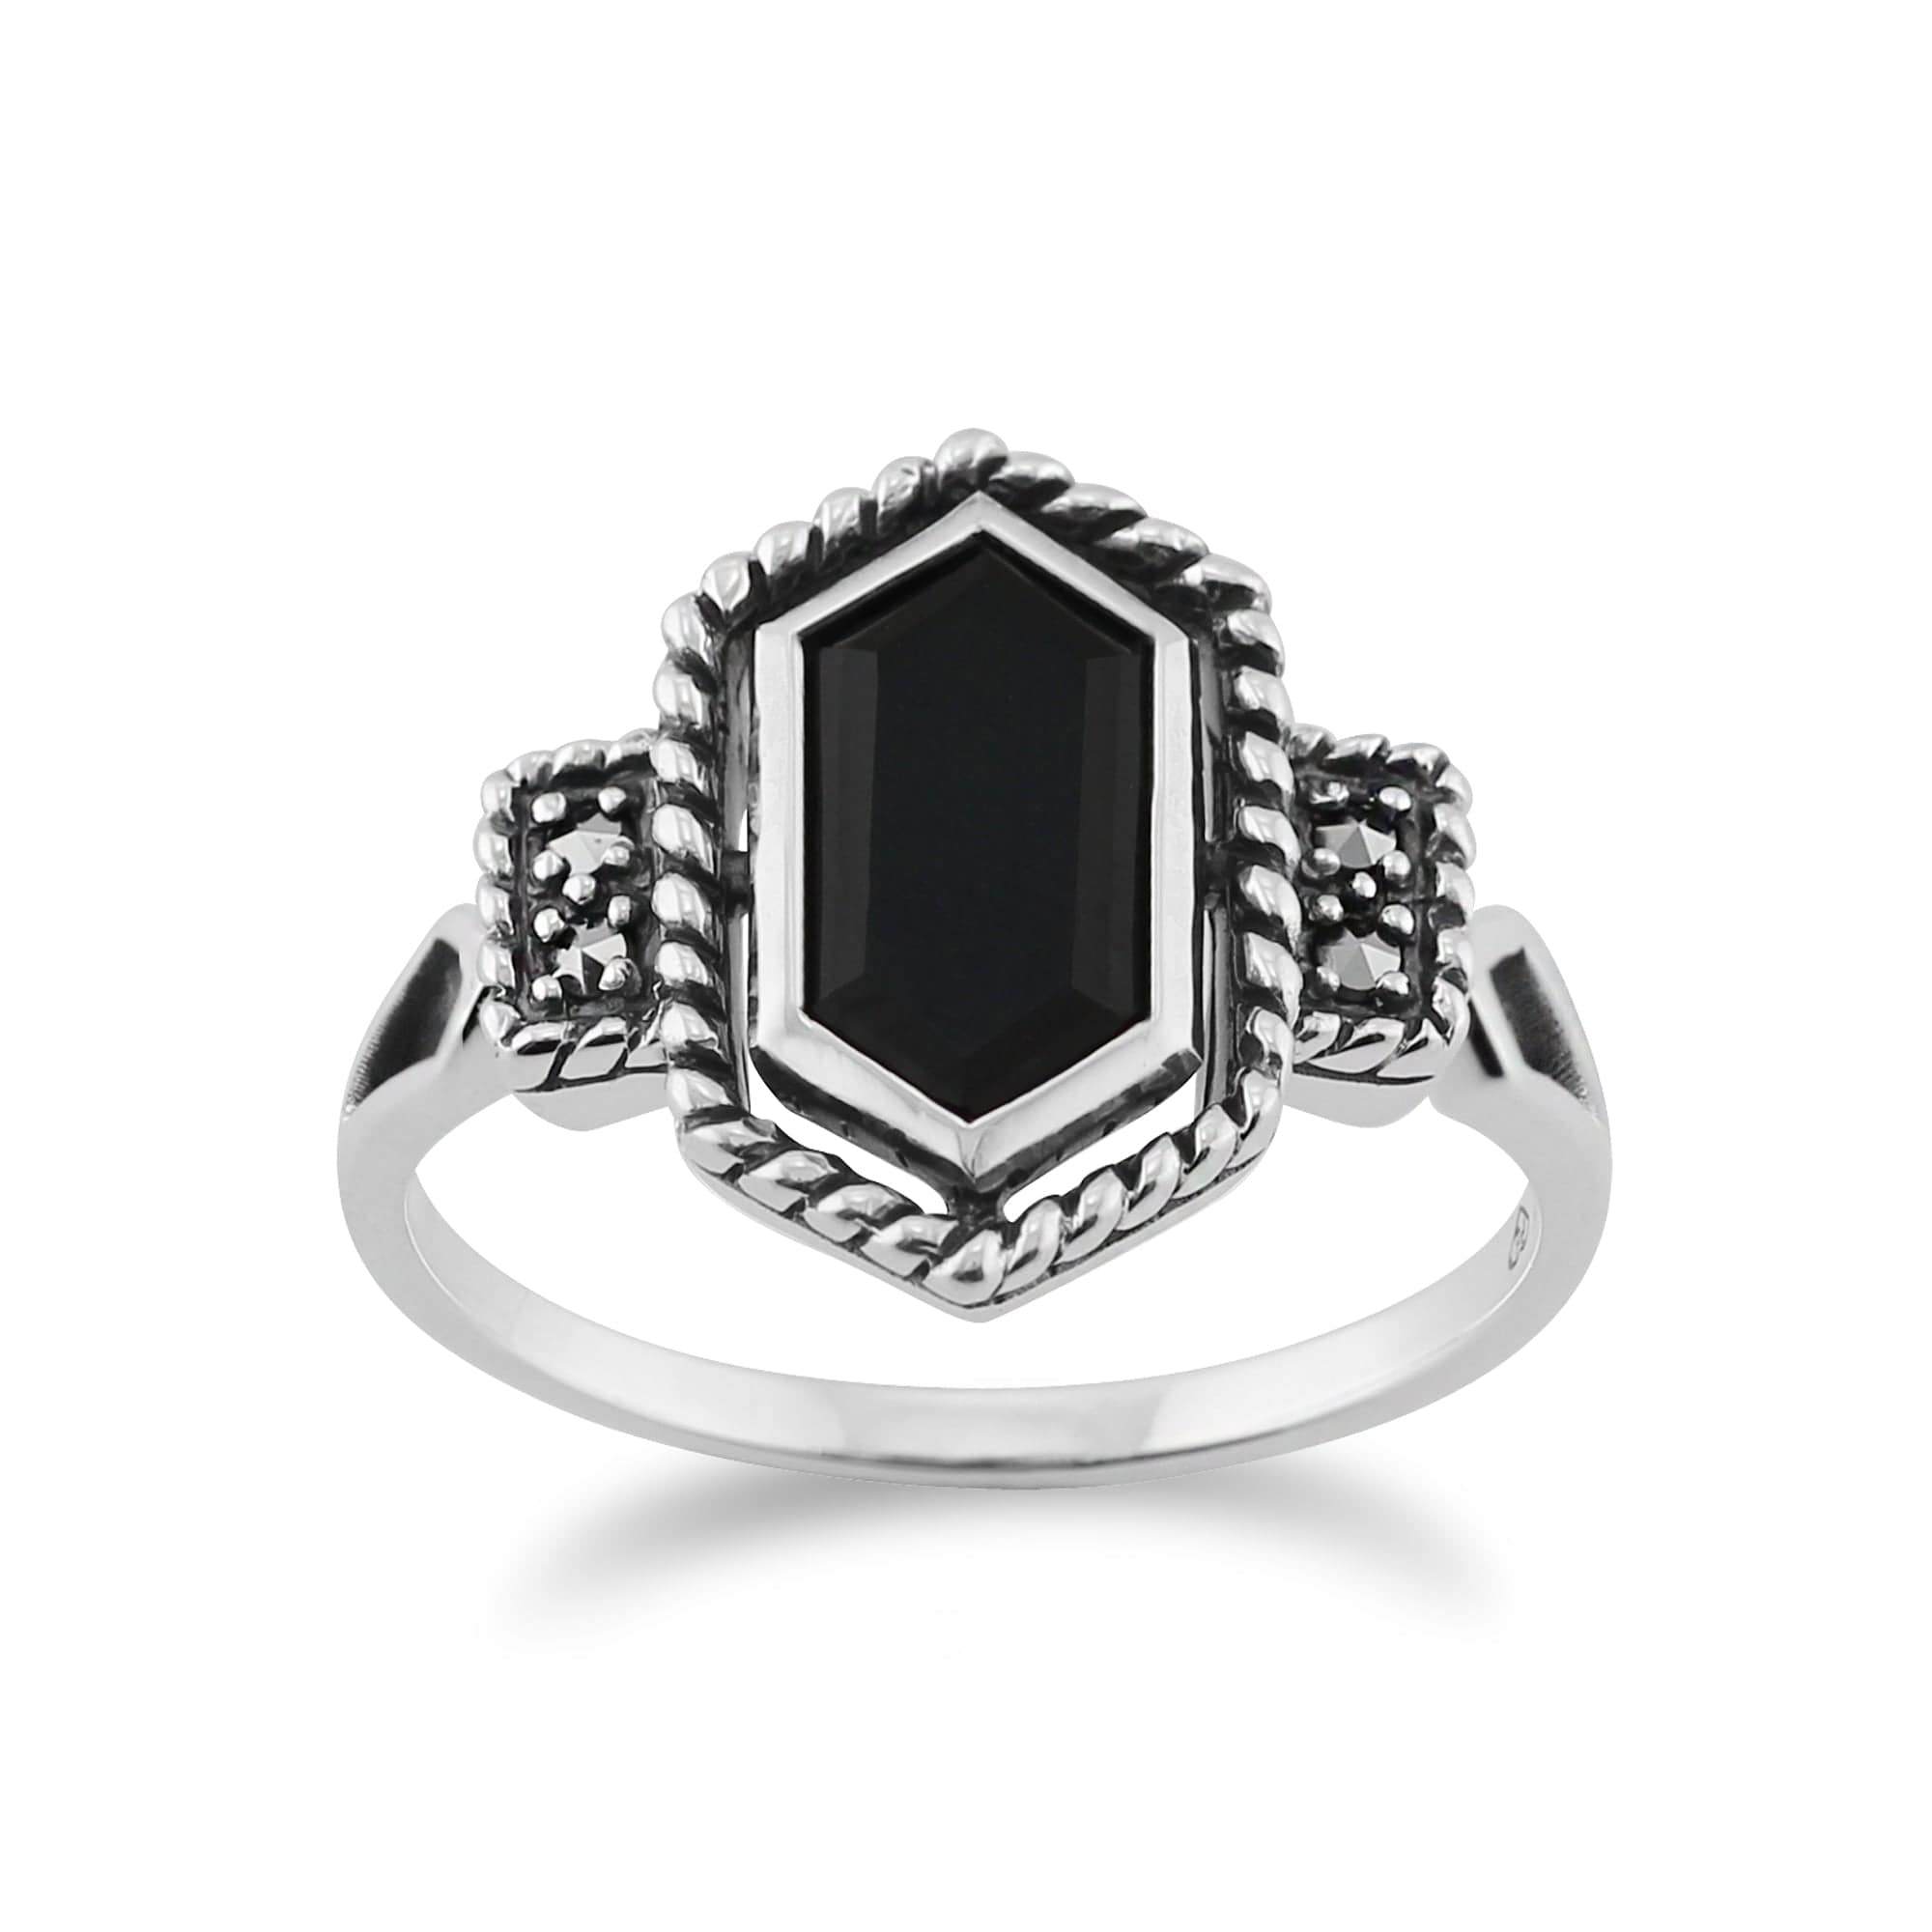 Gemondo Sterling Silver 1.00ct Black Onyx & 4.8pt Marcasite Art Deco Style Ring Image 1